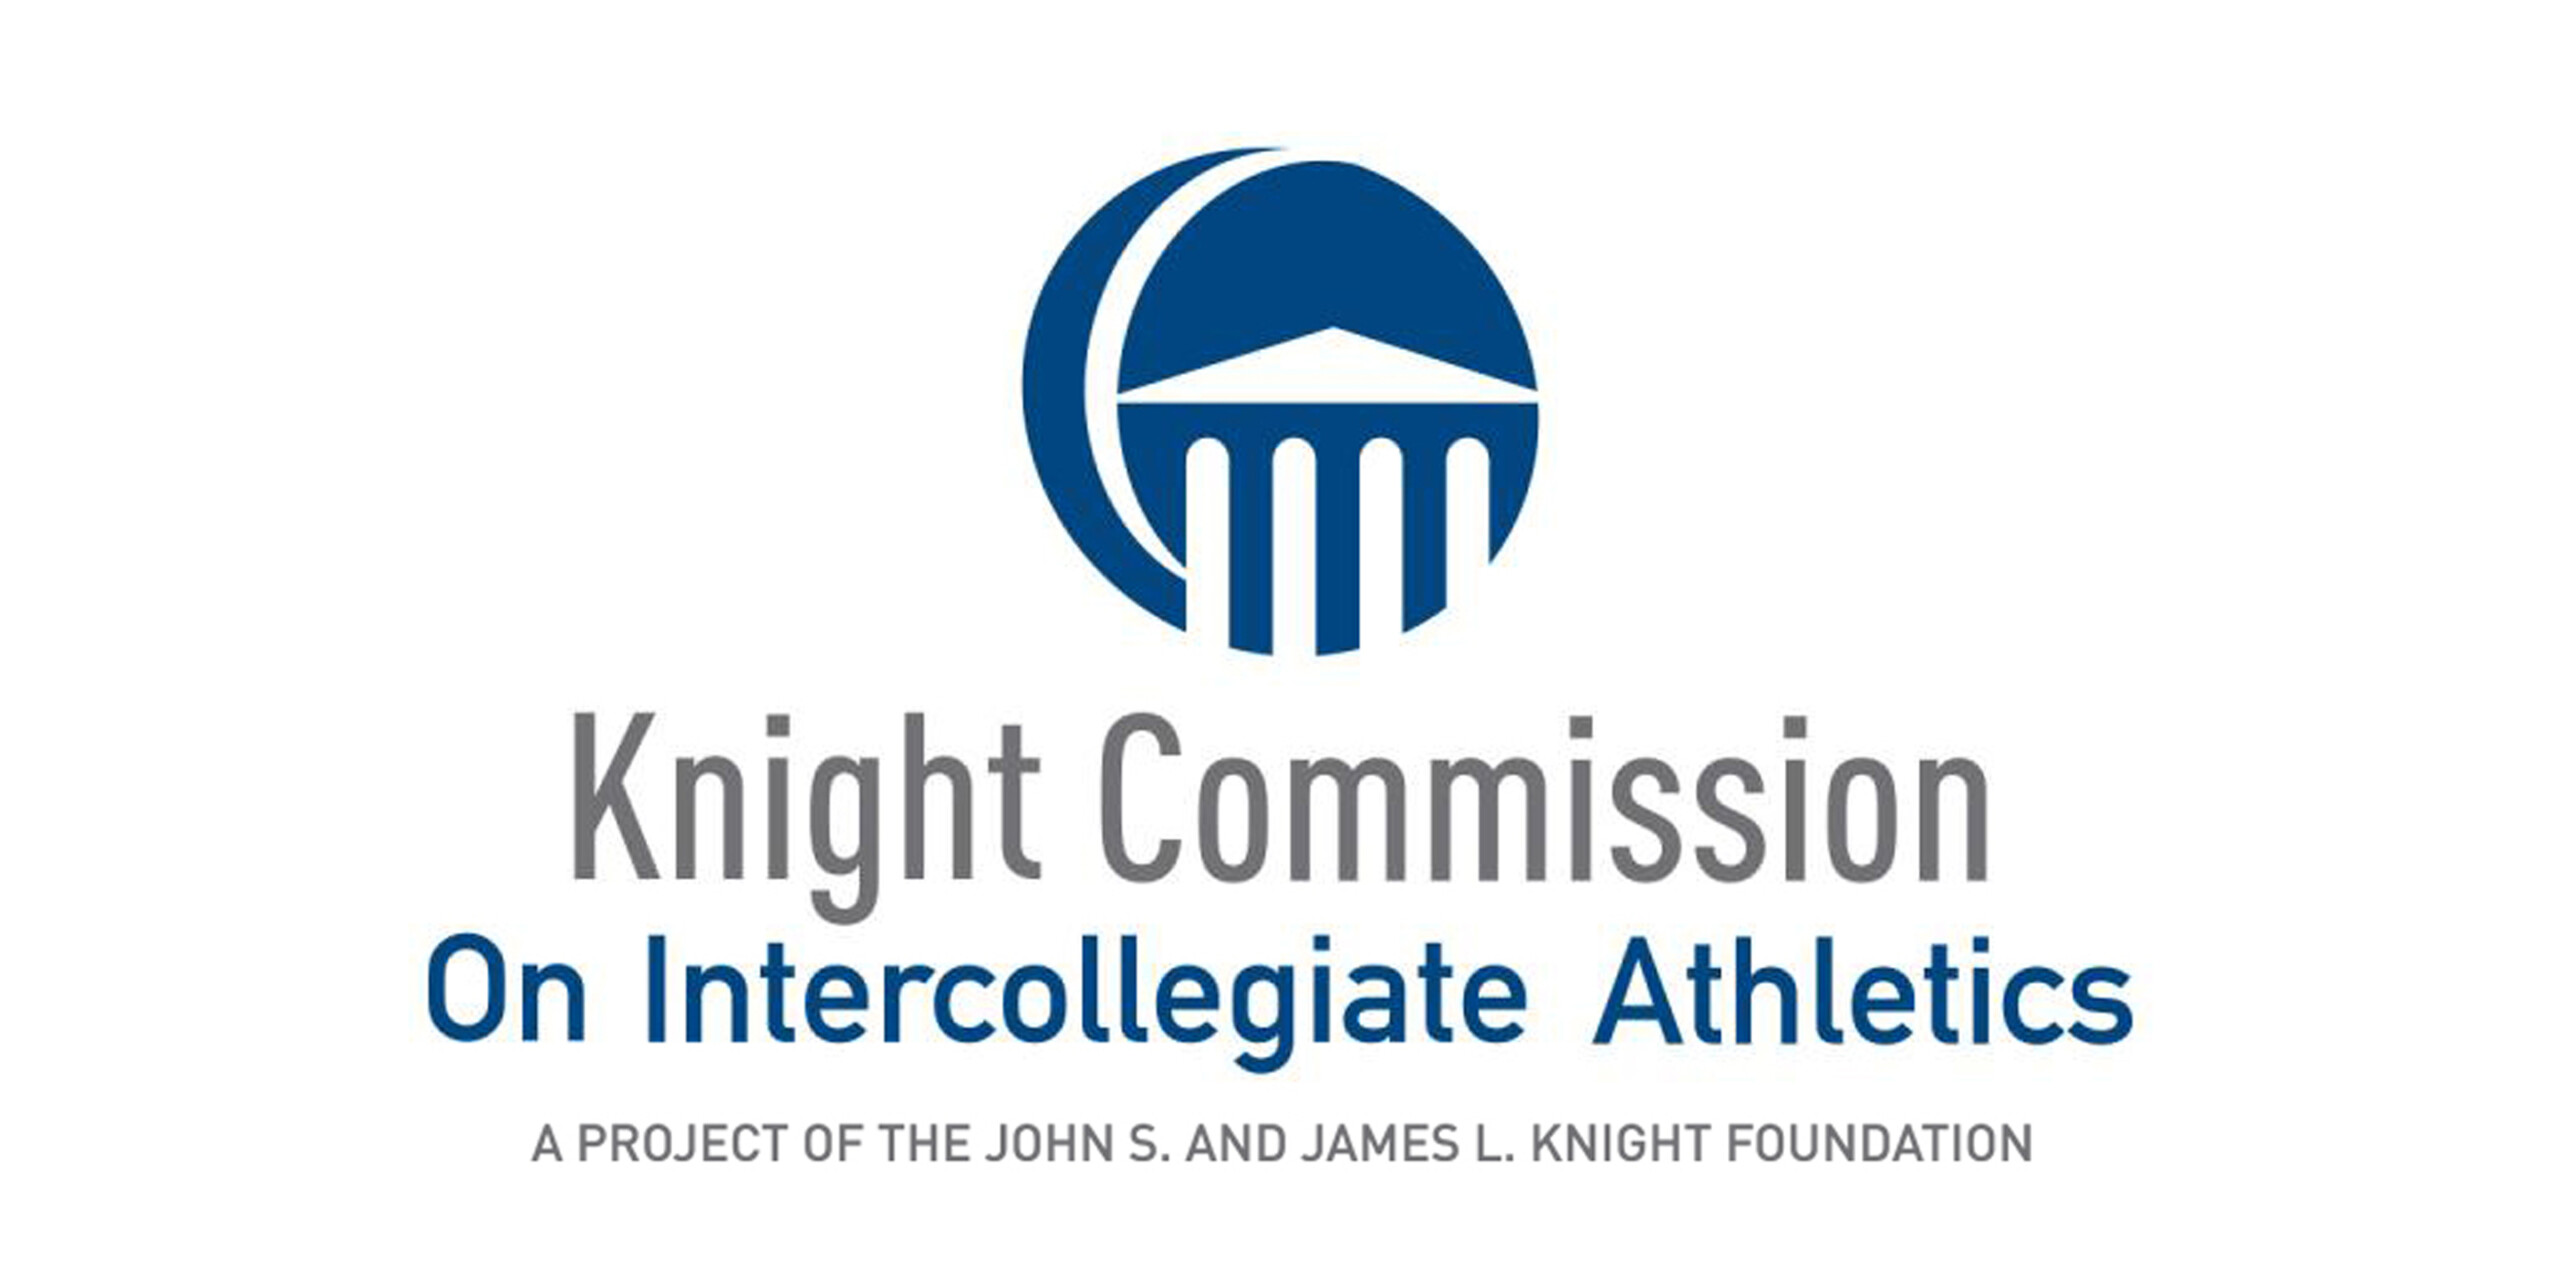 www.knightcommission.org